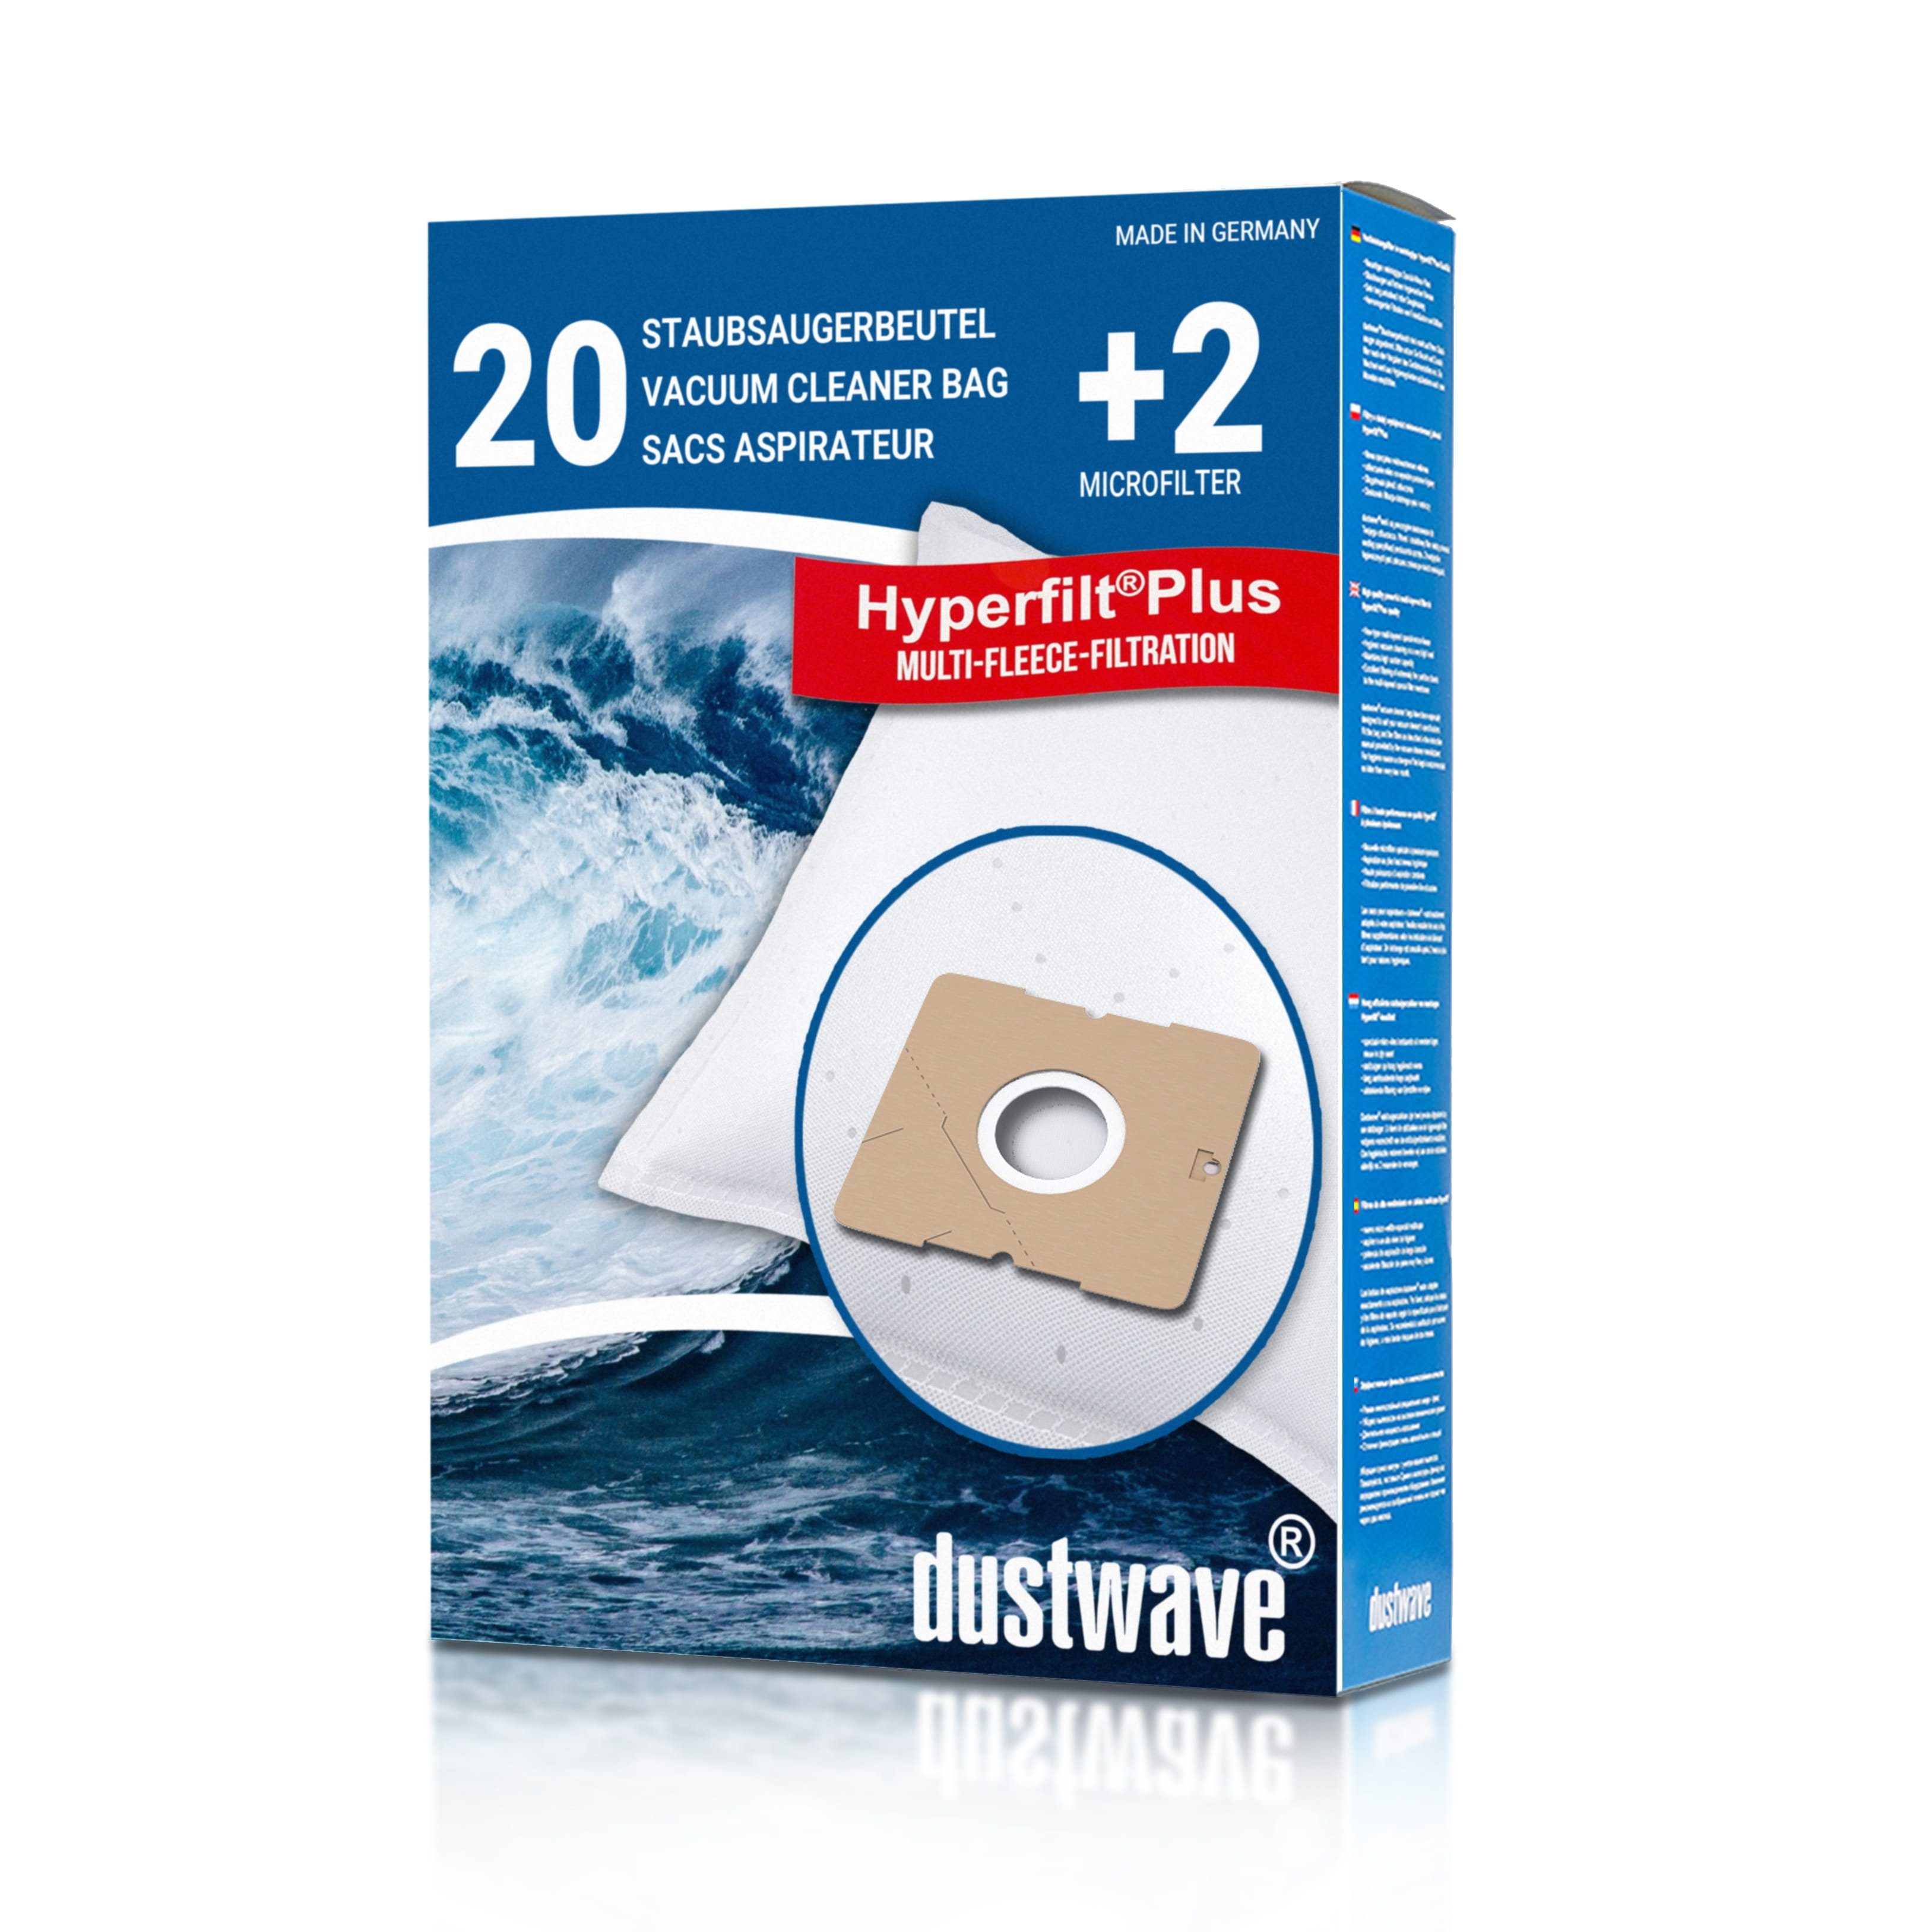 Dustwave Staubsaugerbeutel Megapack, passend für AmazonBasics W31, 20 St., Megapack, 20 Staubsaugerbeutel + 2 Hepa-Filter (ca. 15x15cm - zuschneidbar)